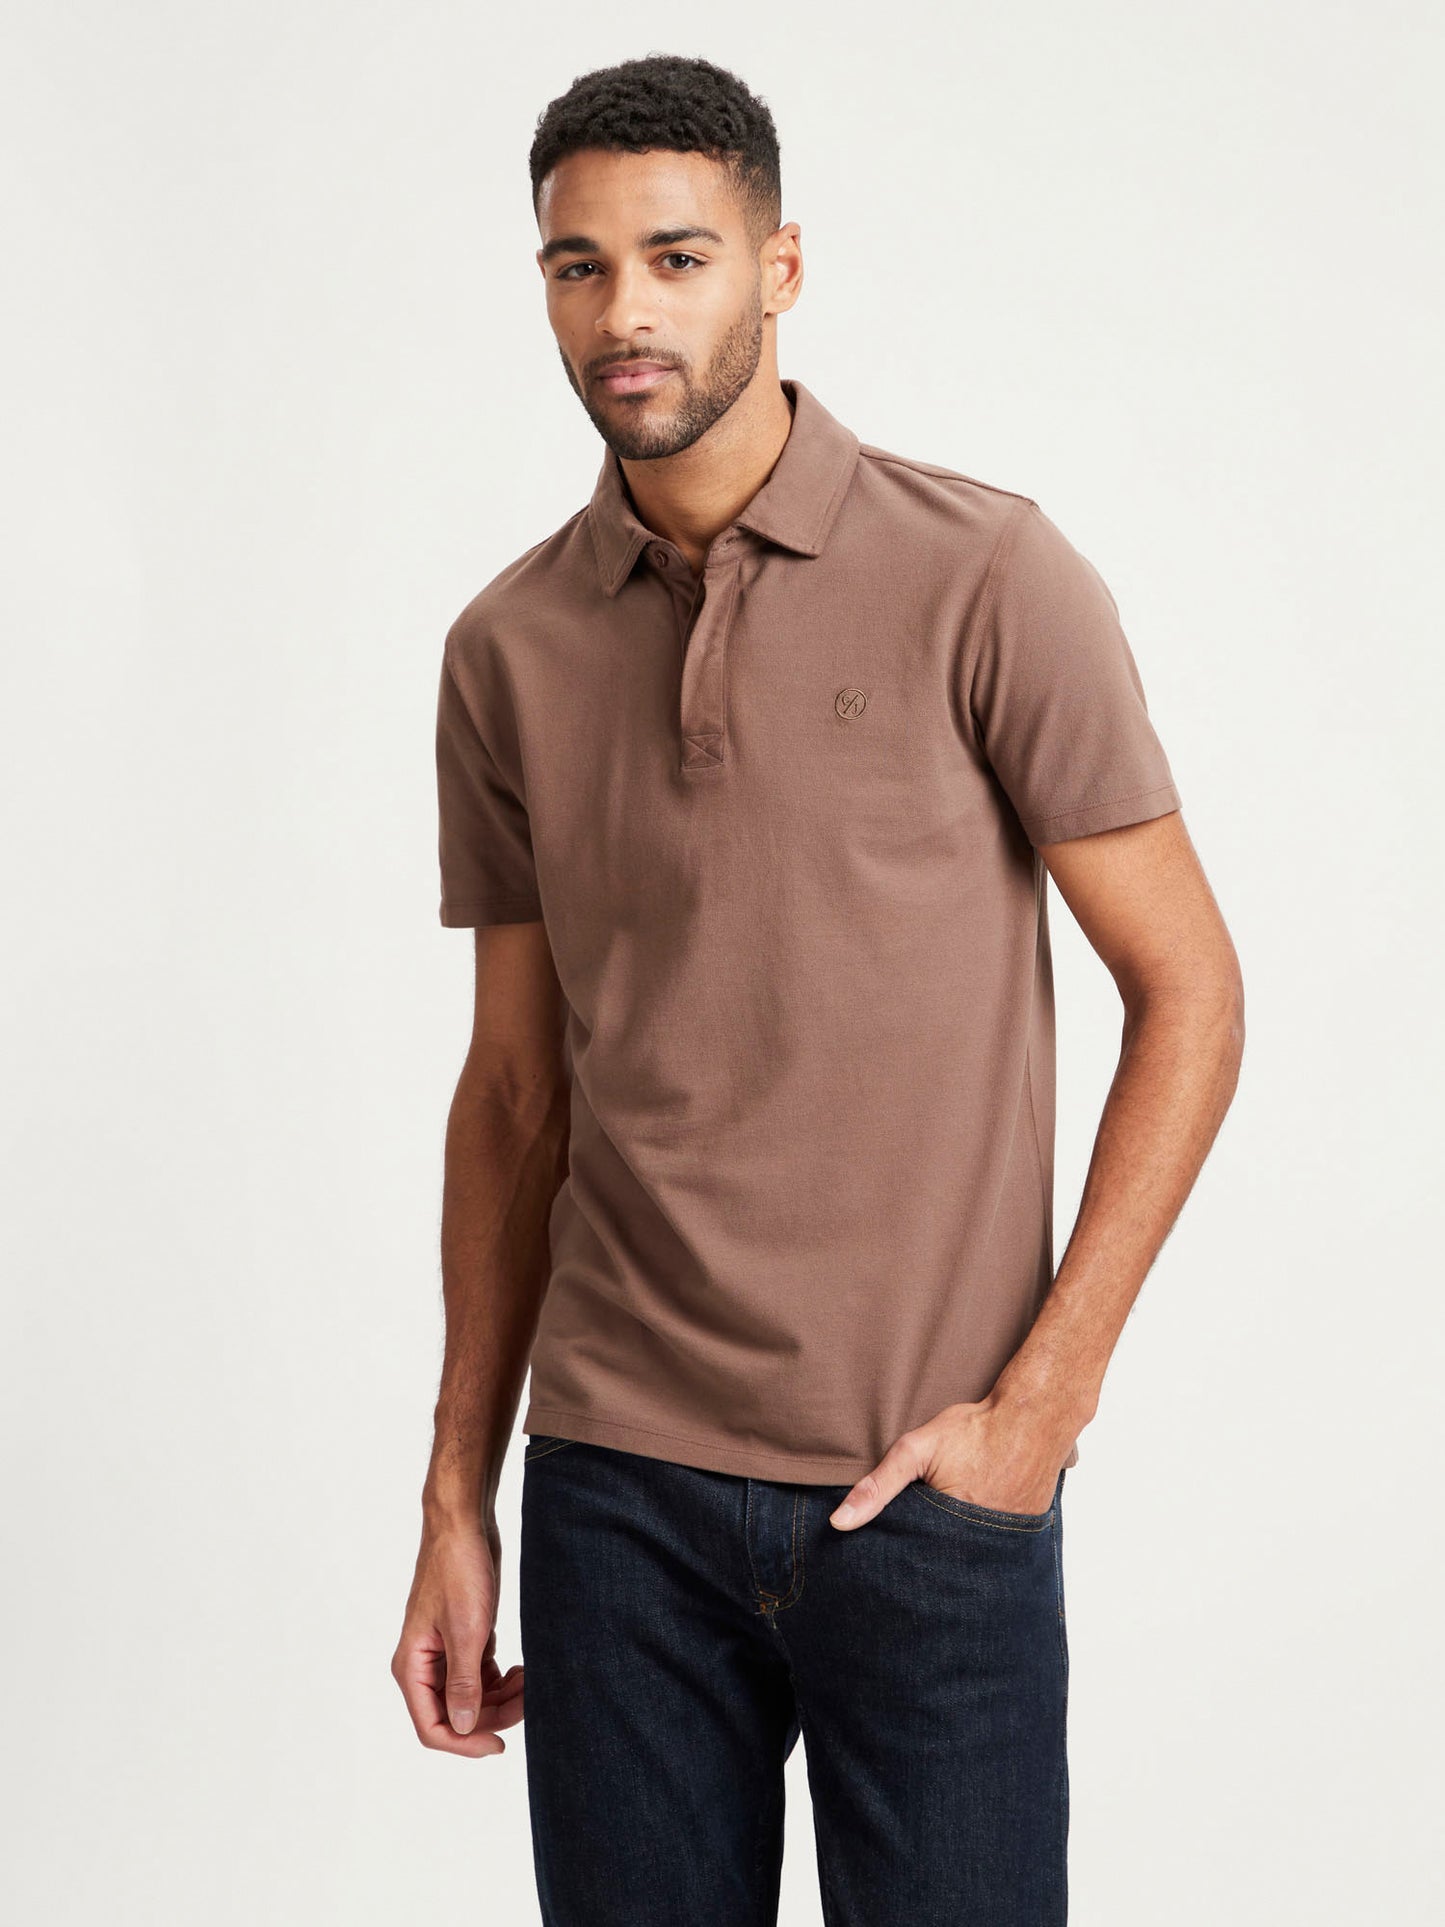 Men's regular polo shirt with tonal label emblem in brown.